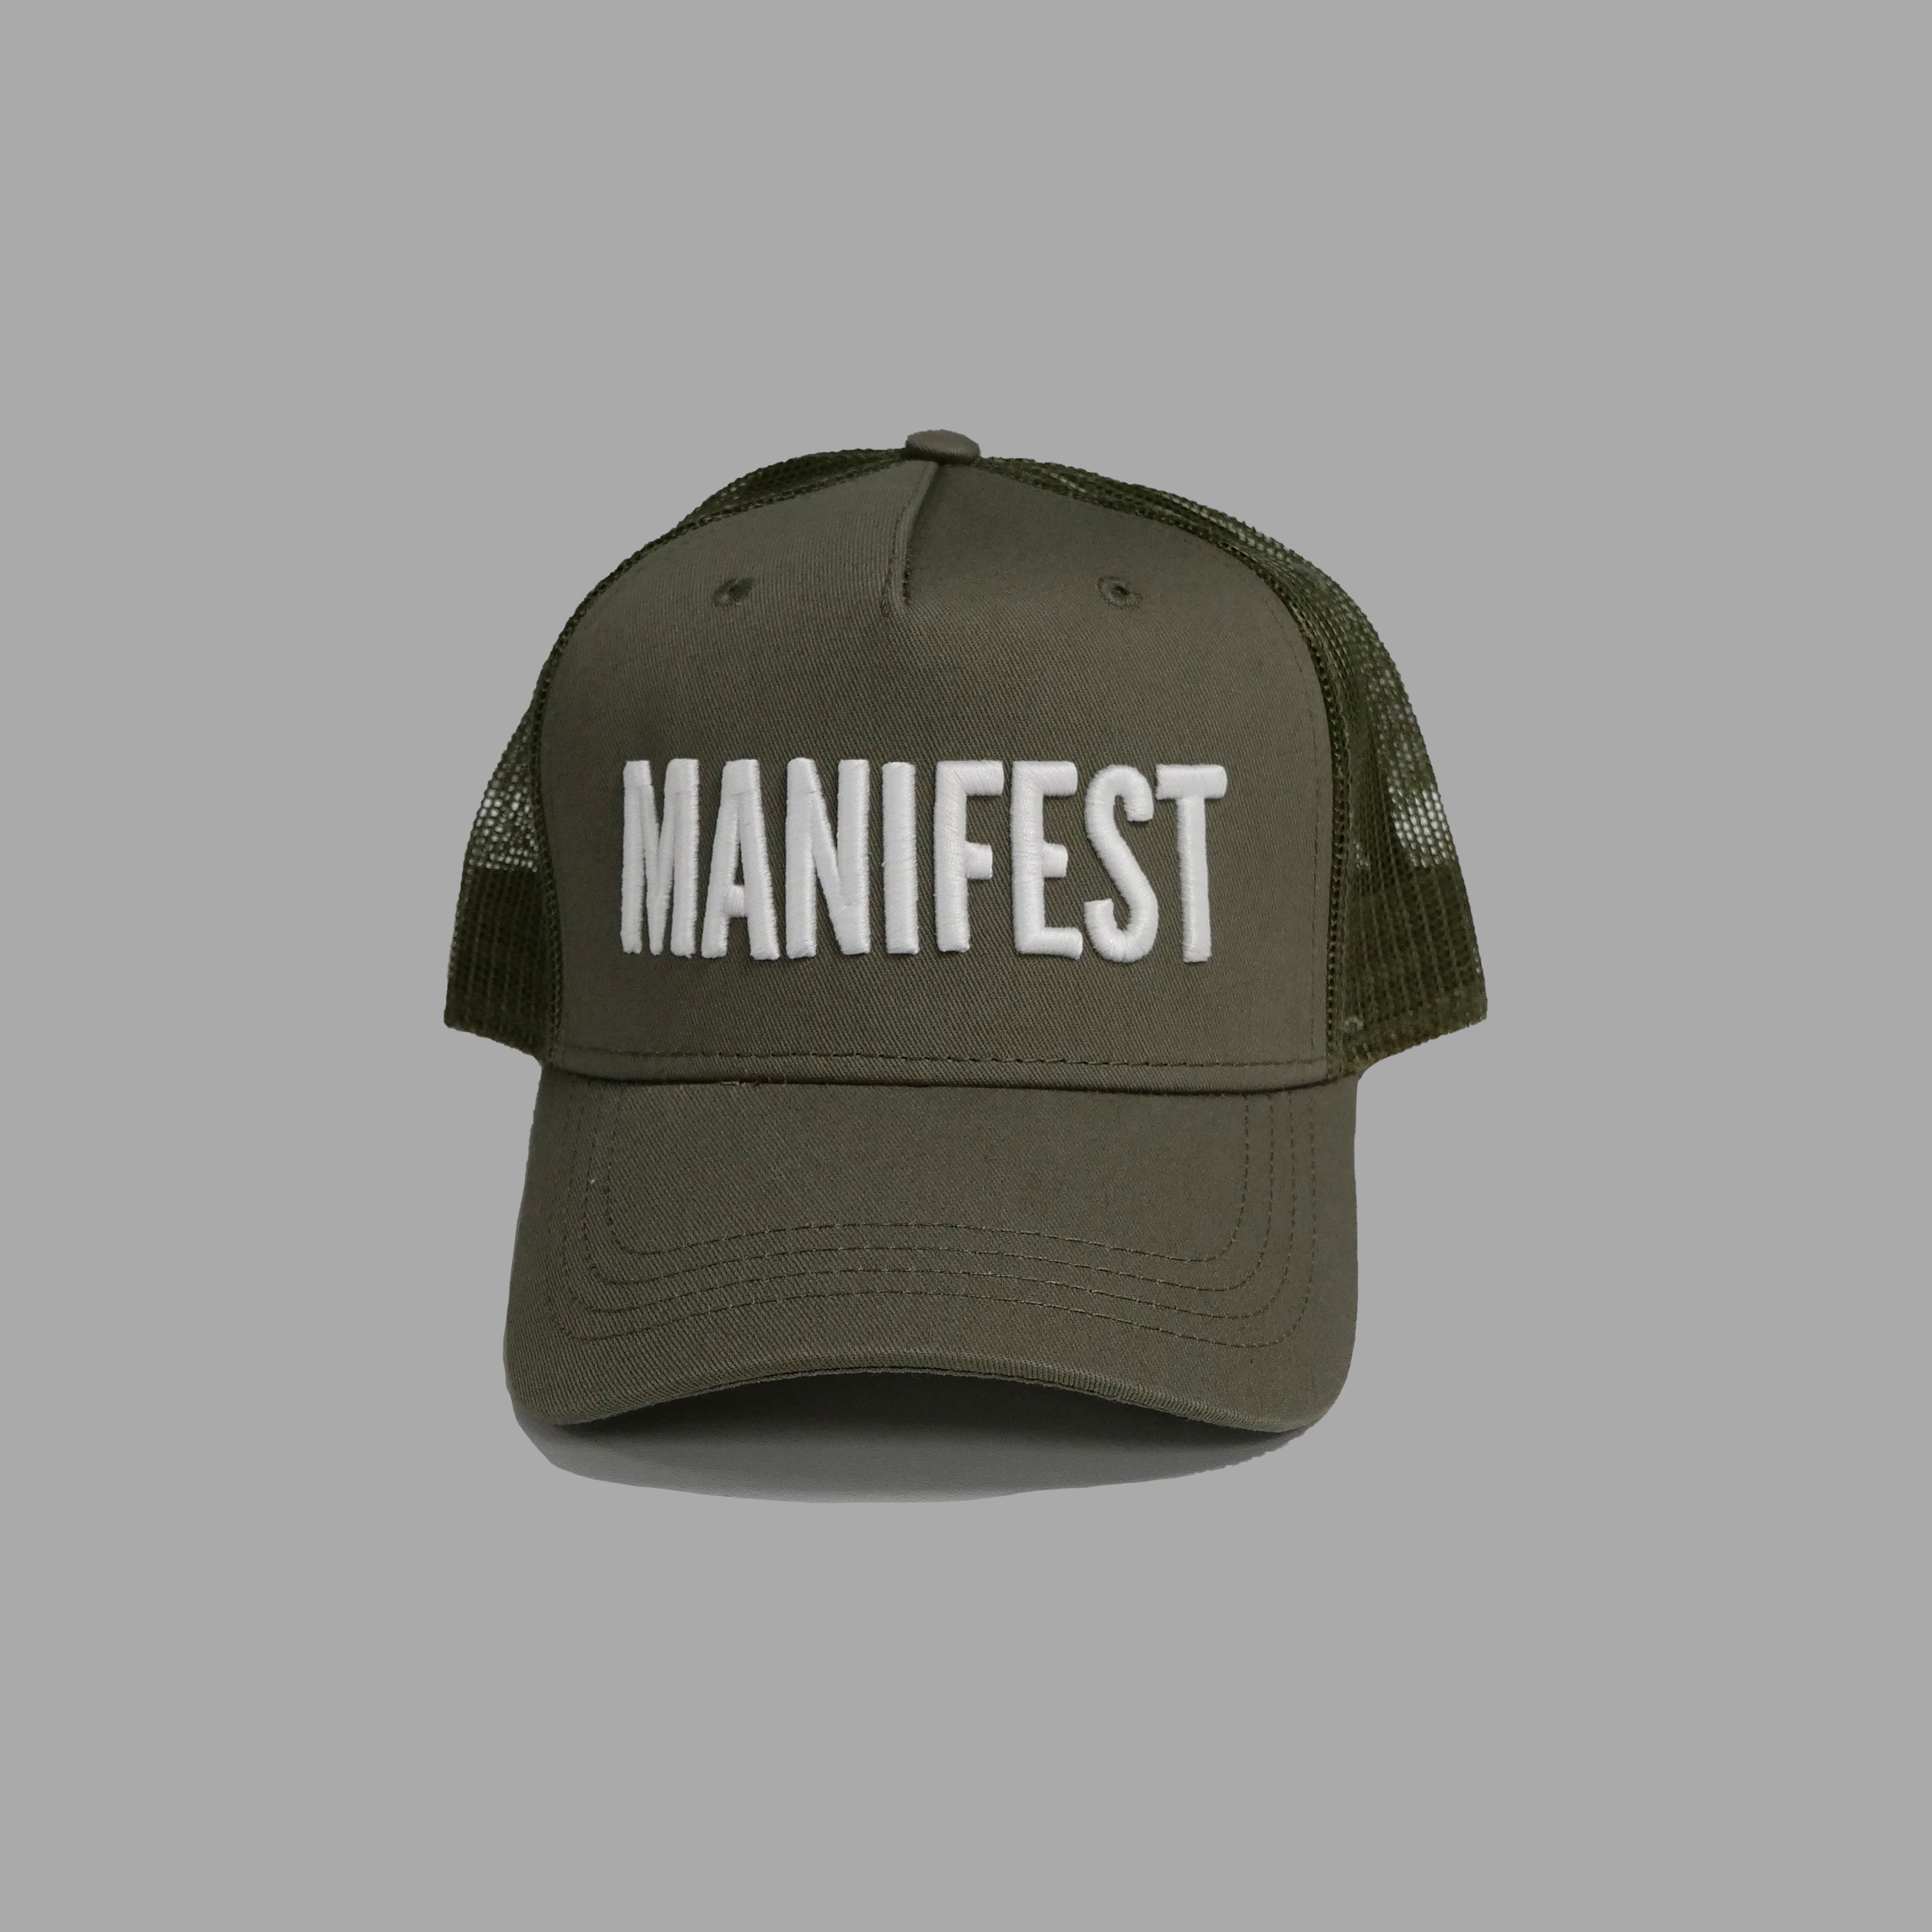 'MANIFEST' Snapback Cap - Khaki